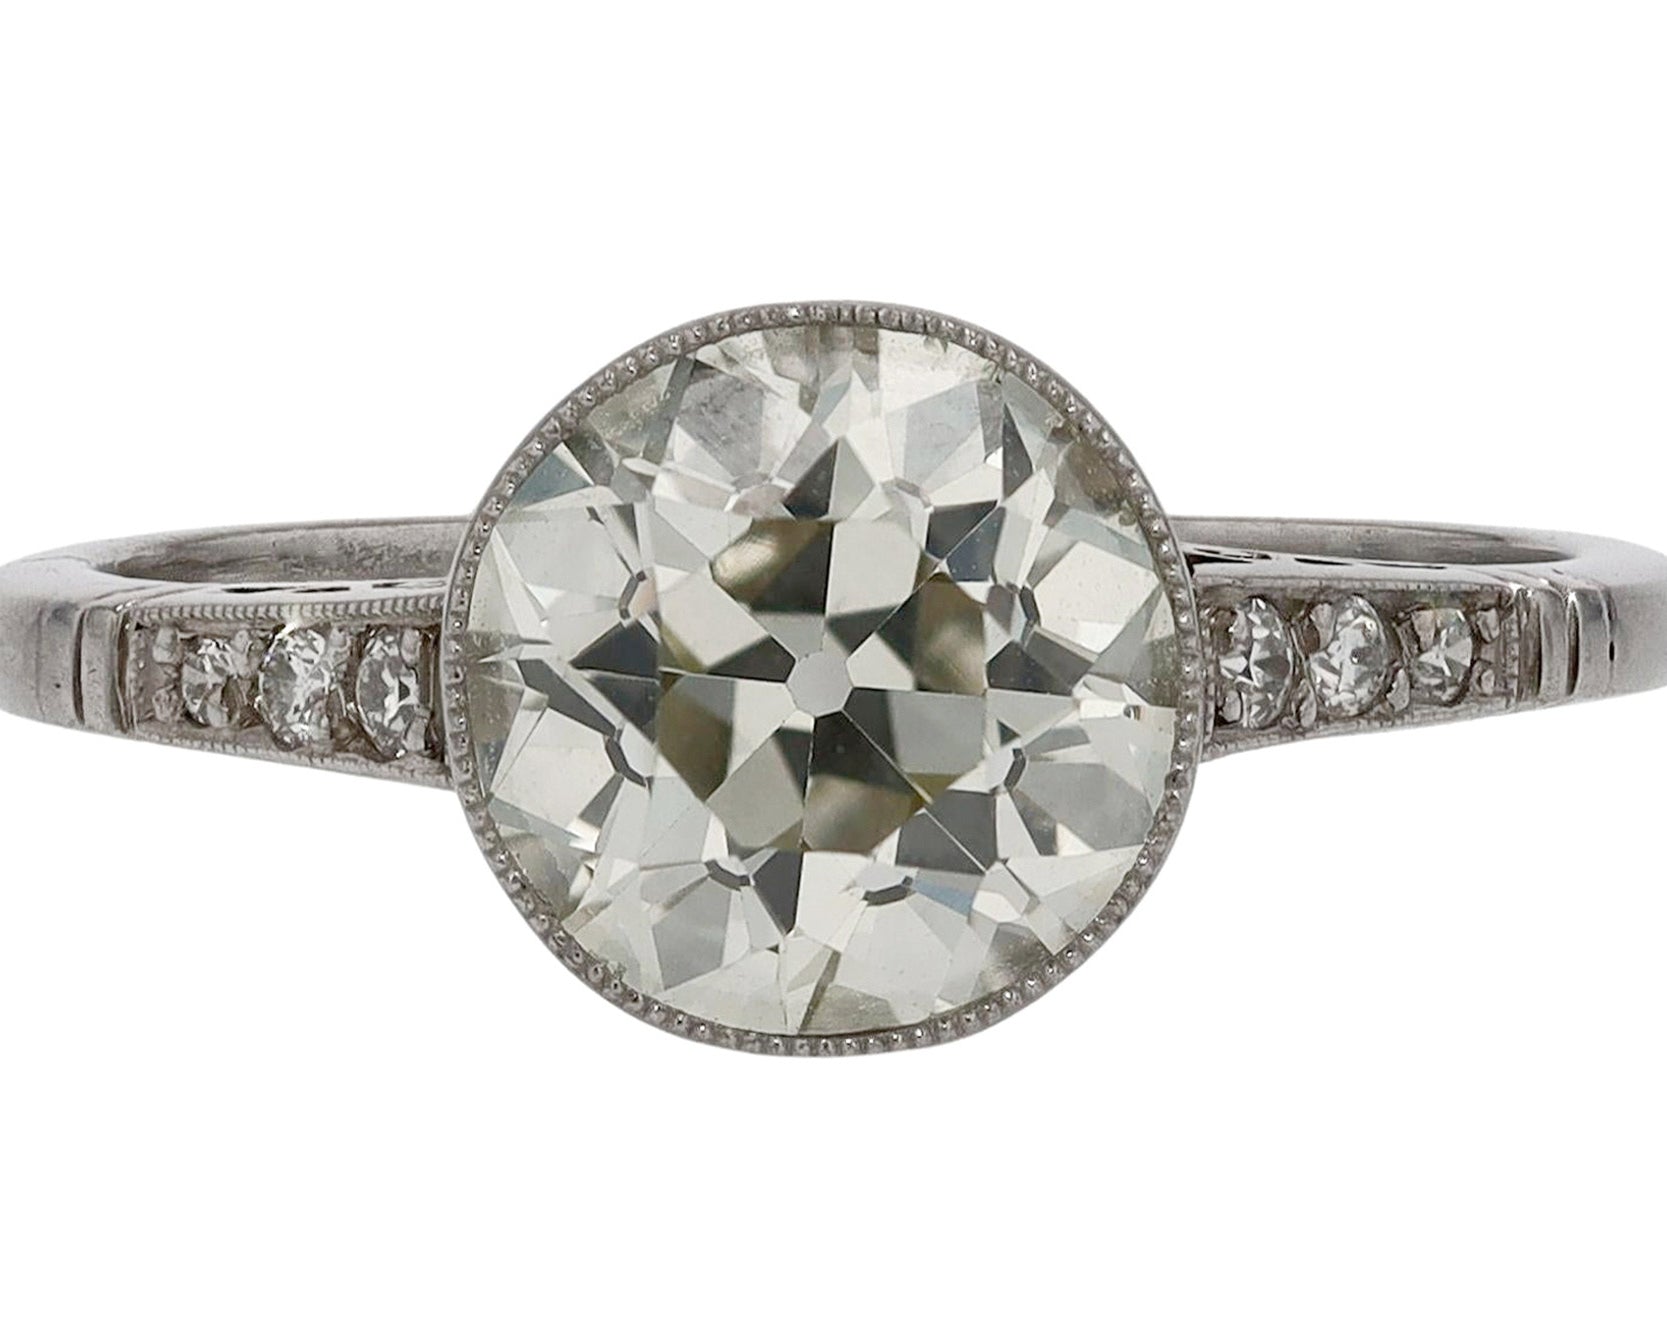 2 Carat Diamond Art Deco Ring